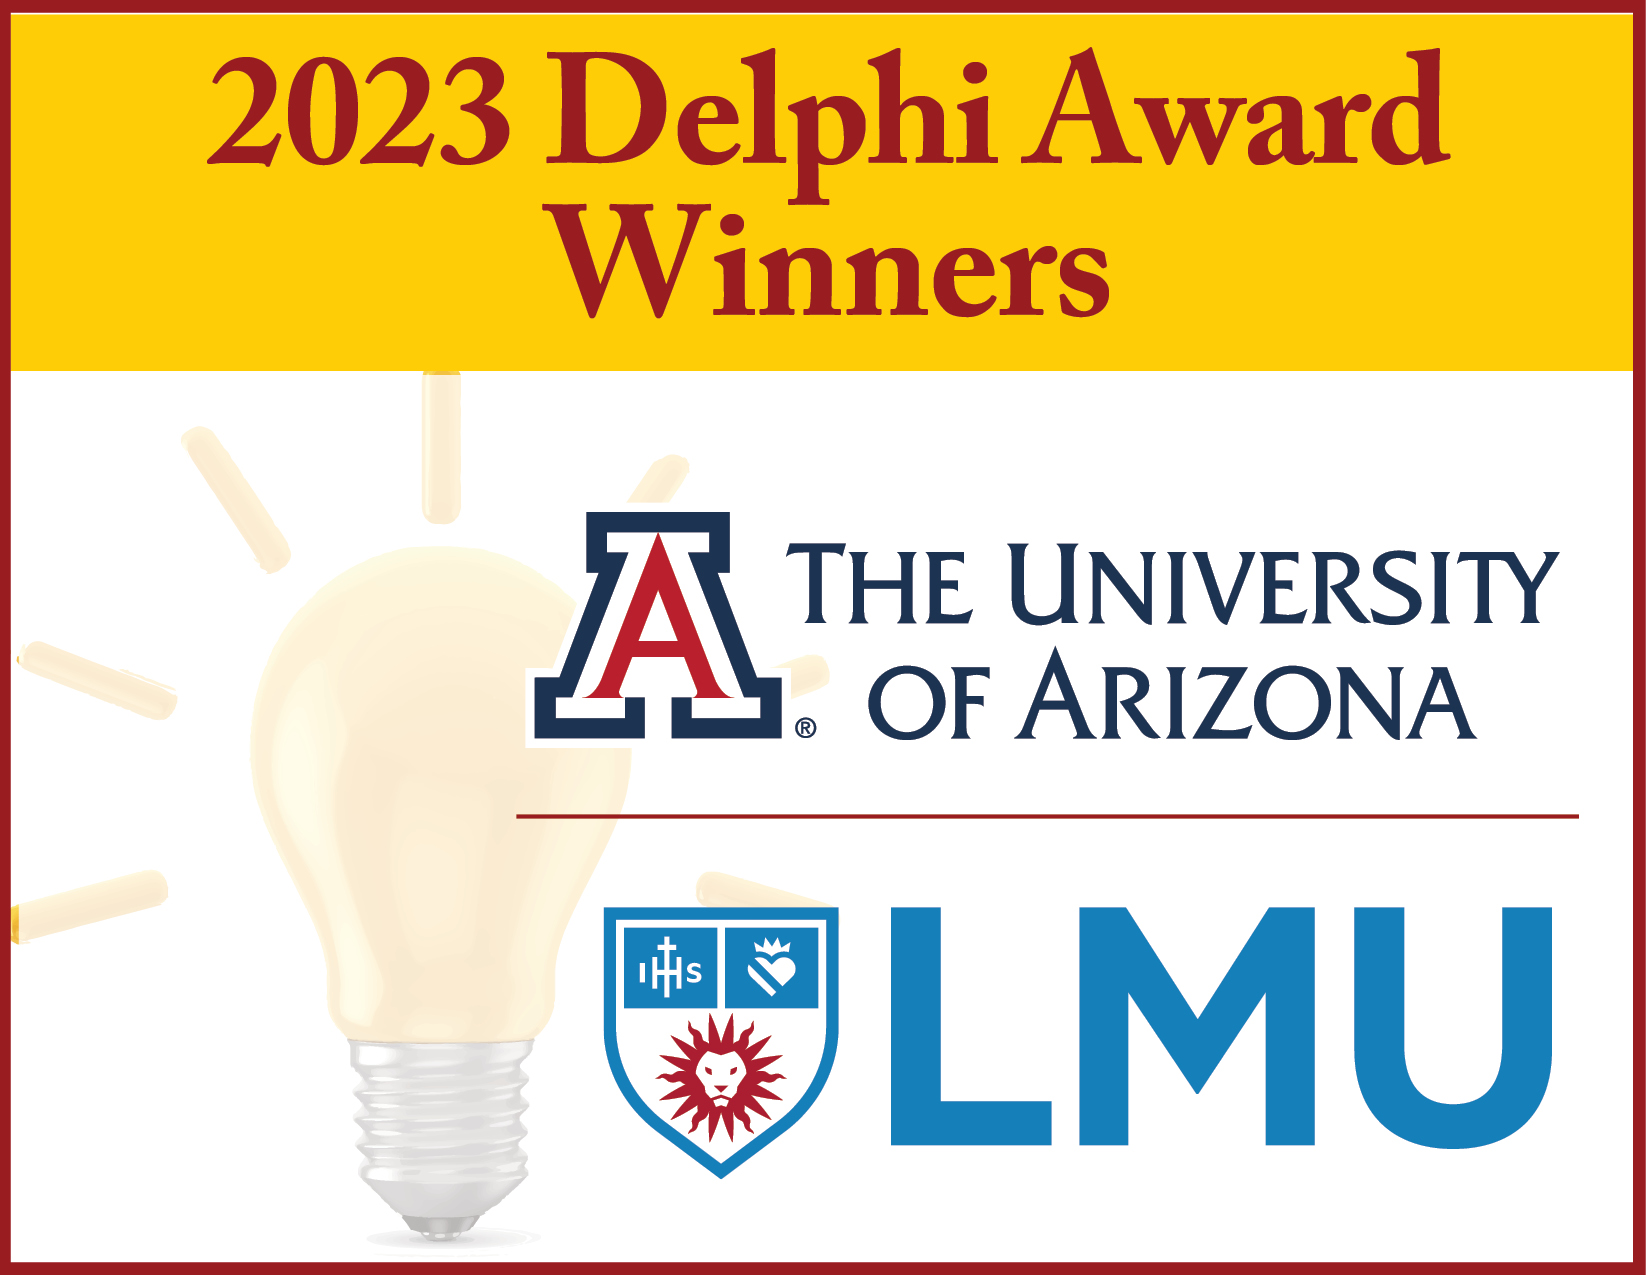 2023 Delphi Award Winners: The University of Arizona and LMU